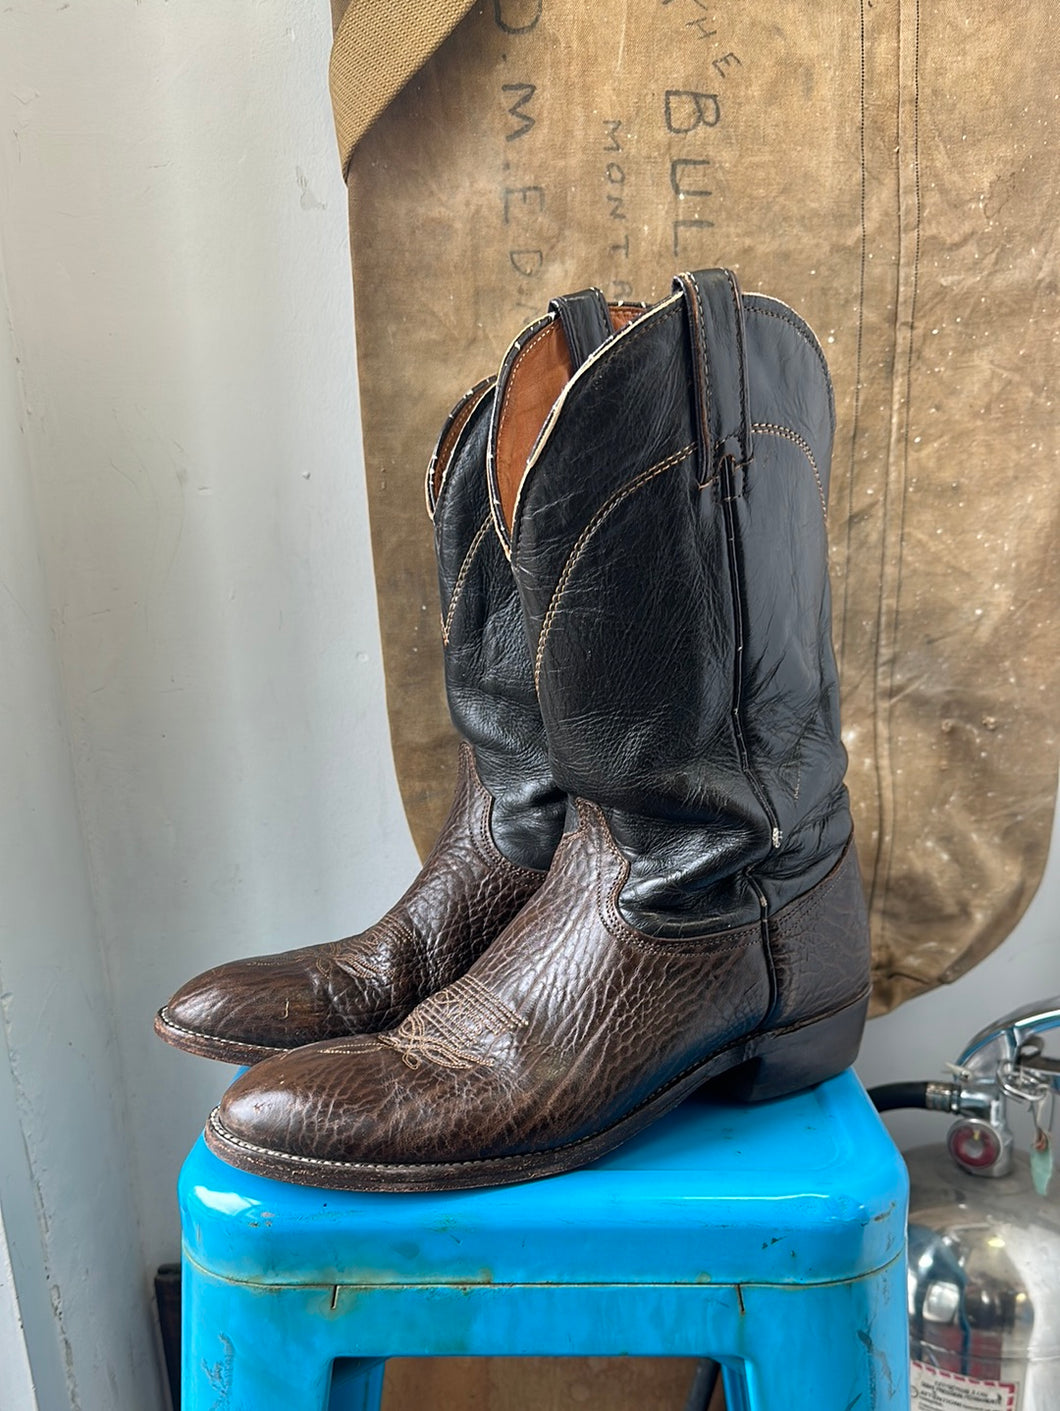 Wrangler Cowboy Boots - Brown/Black - Size 11.5 M